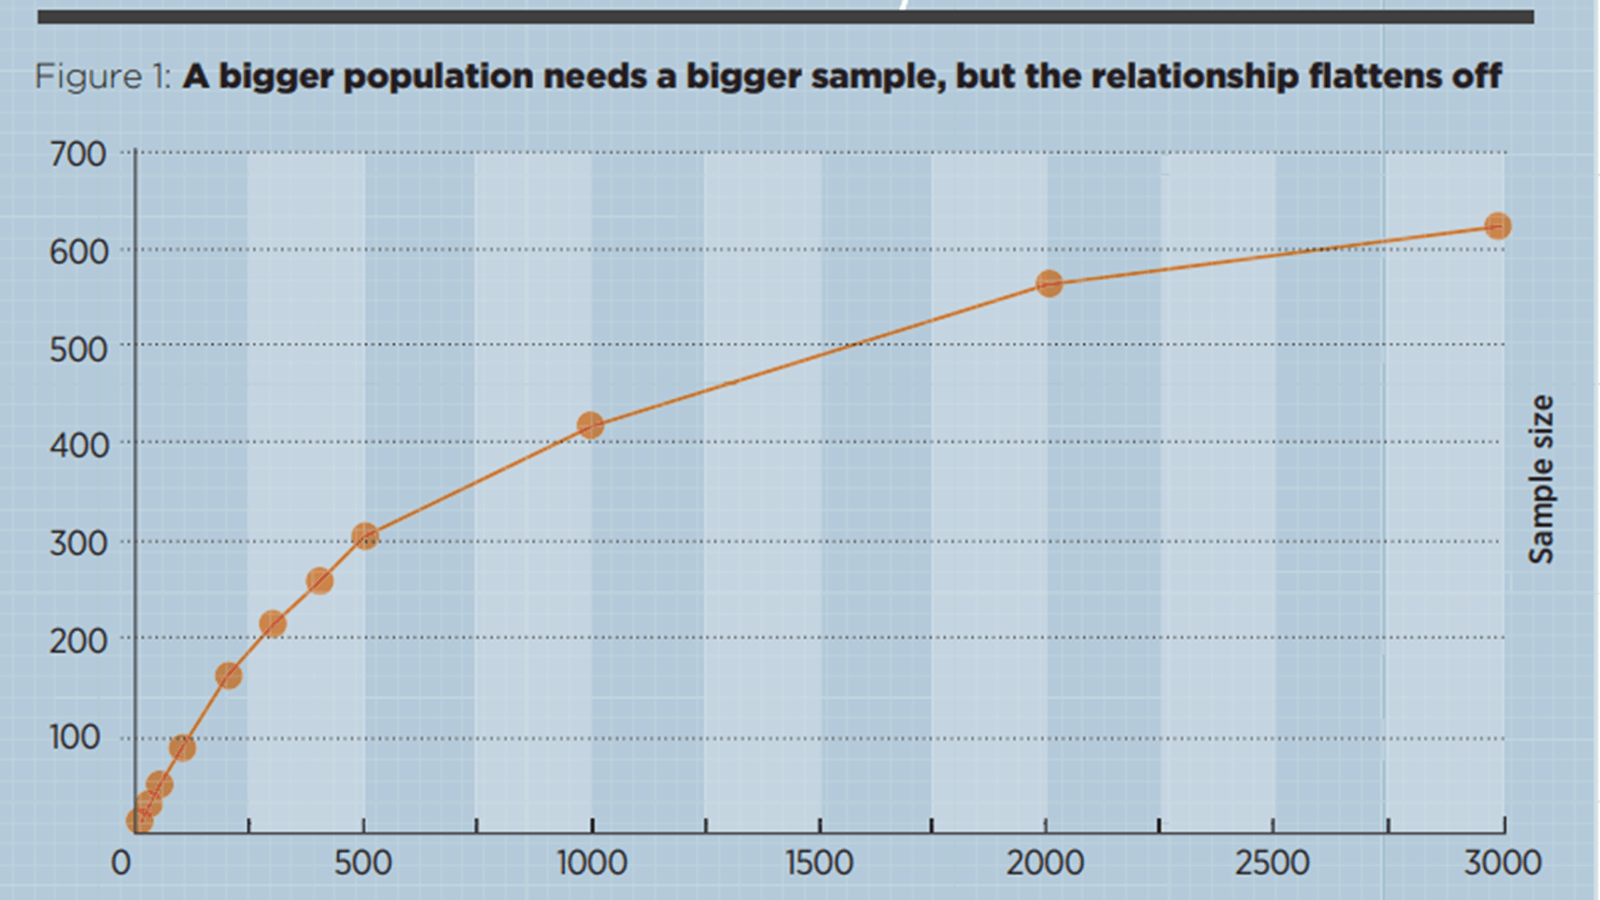 Figure 1: A bigger population needs a bigger sample, but the relationship flattens off